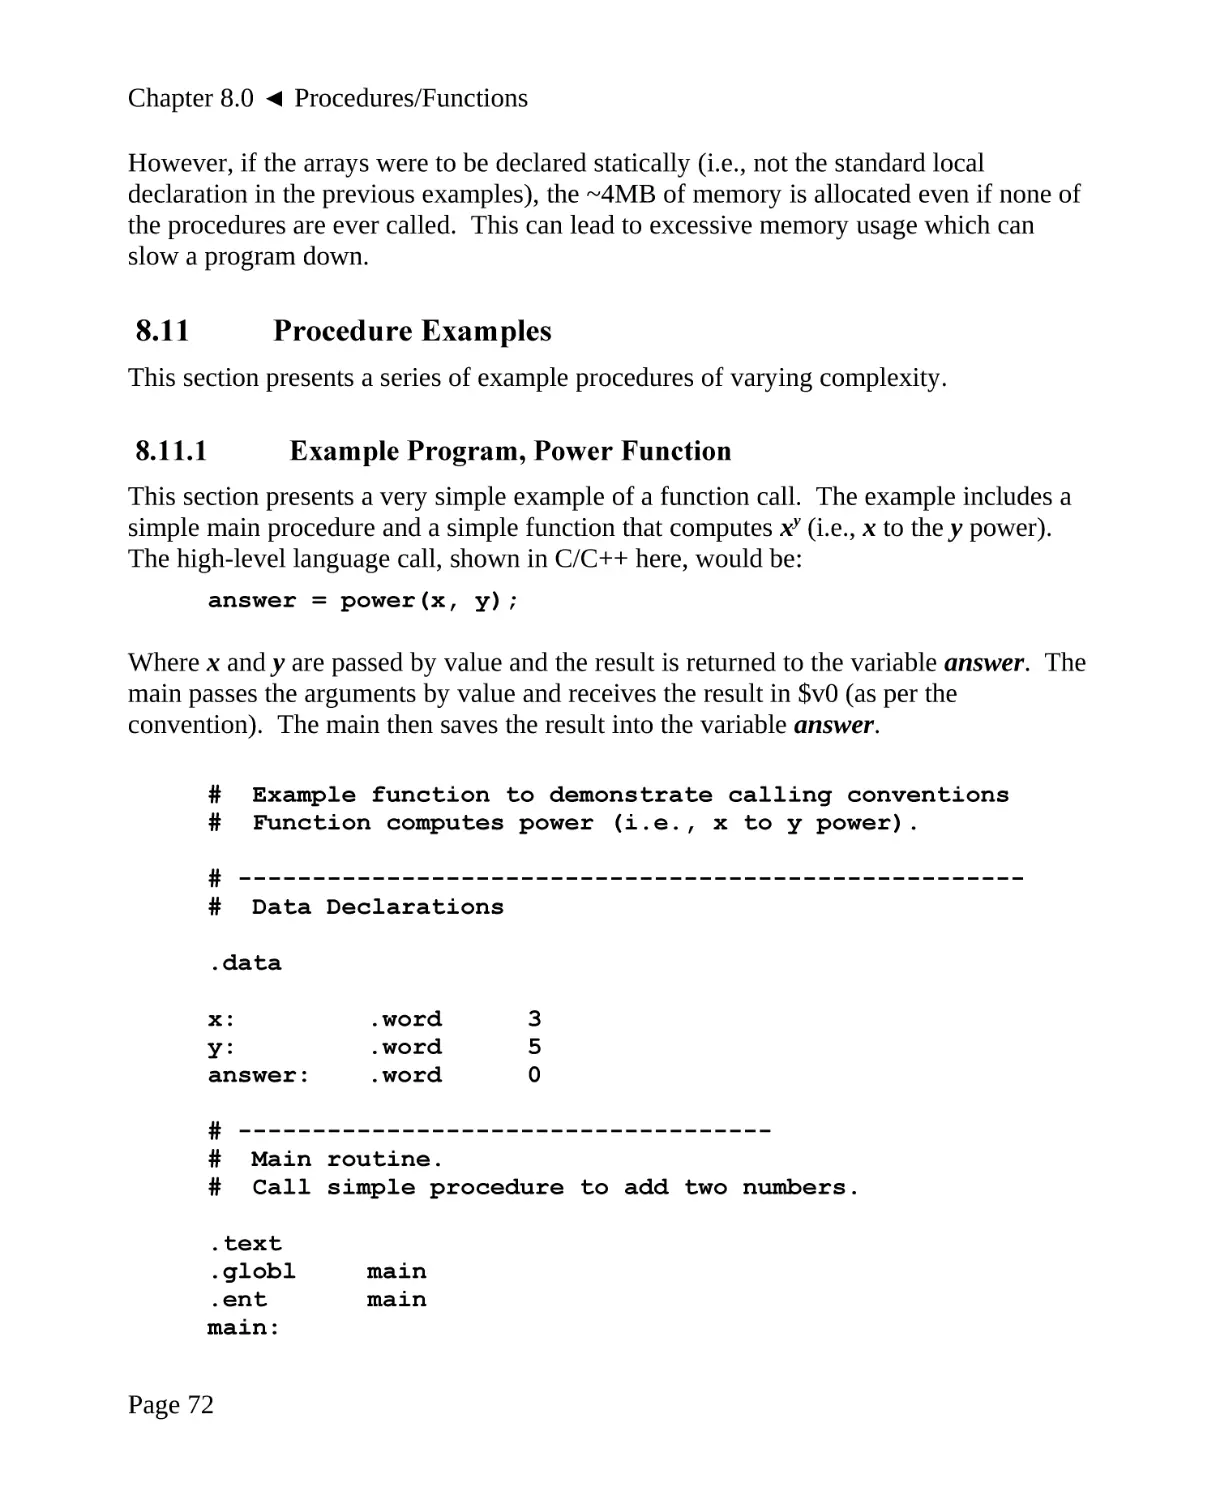 8.11 Procedure Examples
8.11.1 Example Program, Power Function